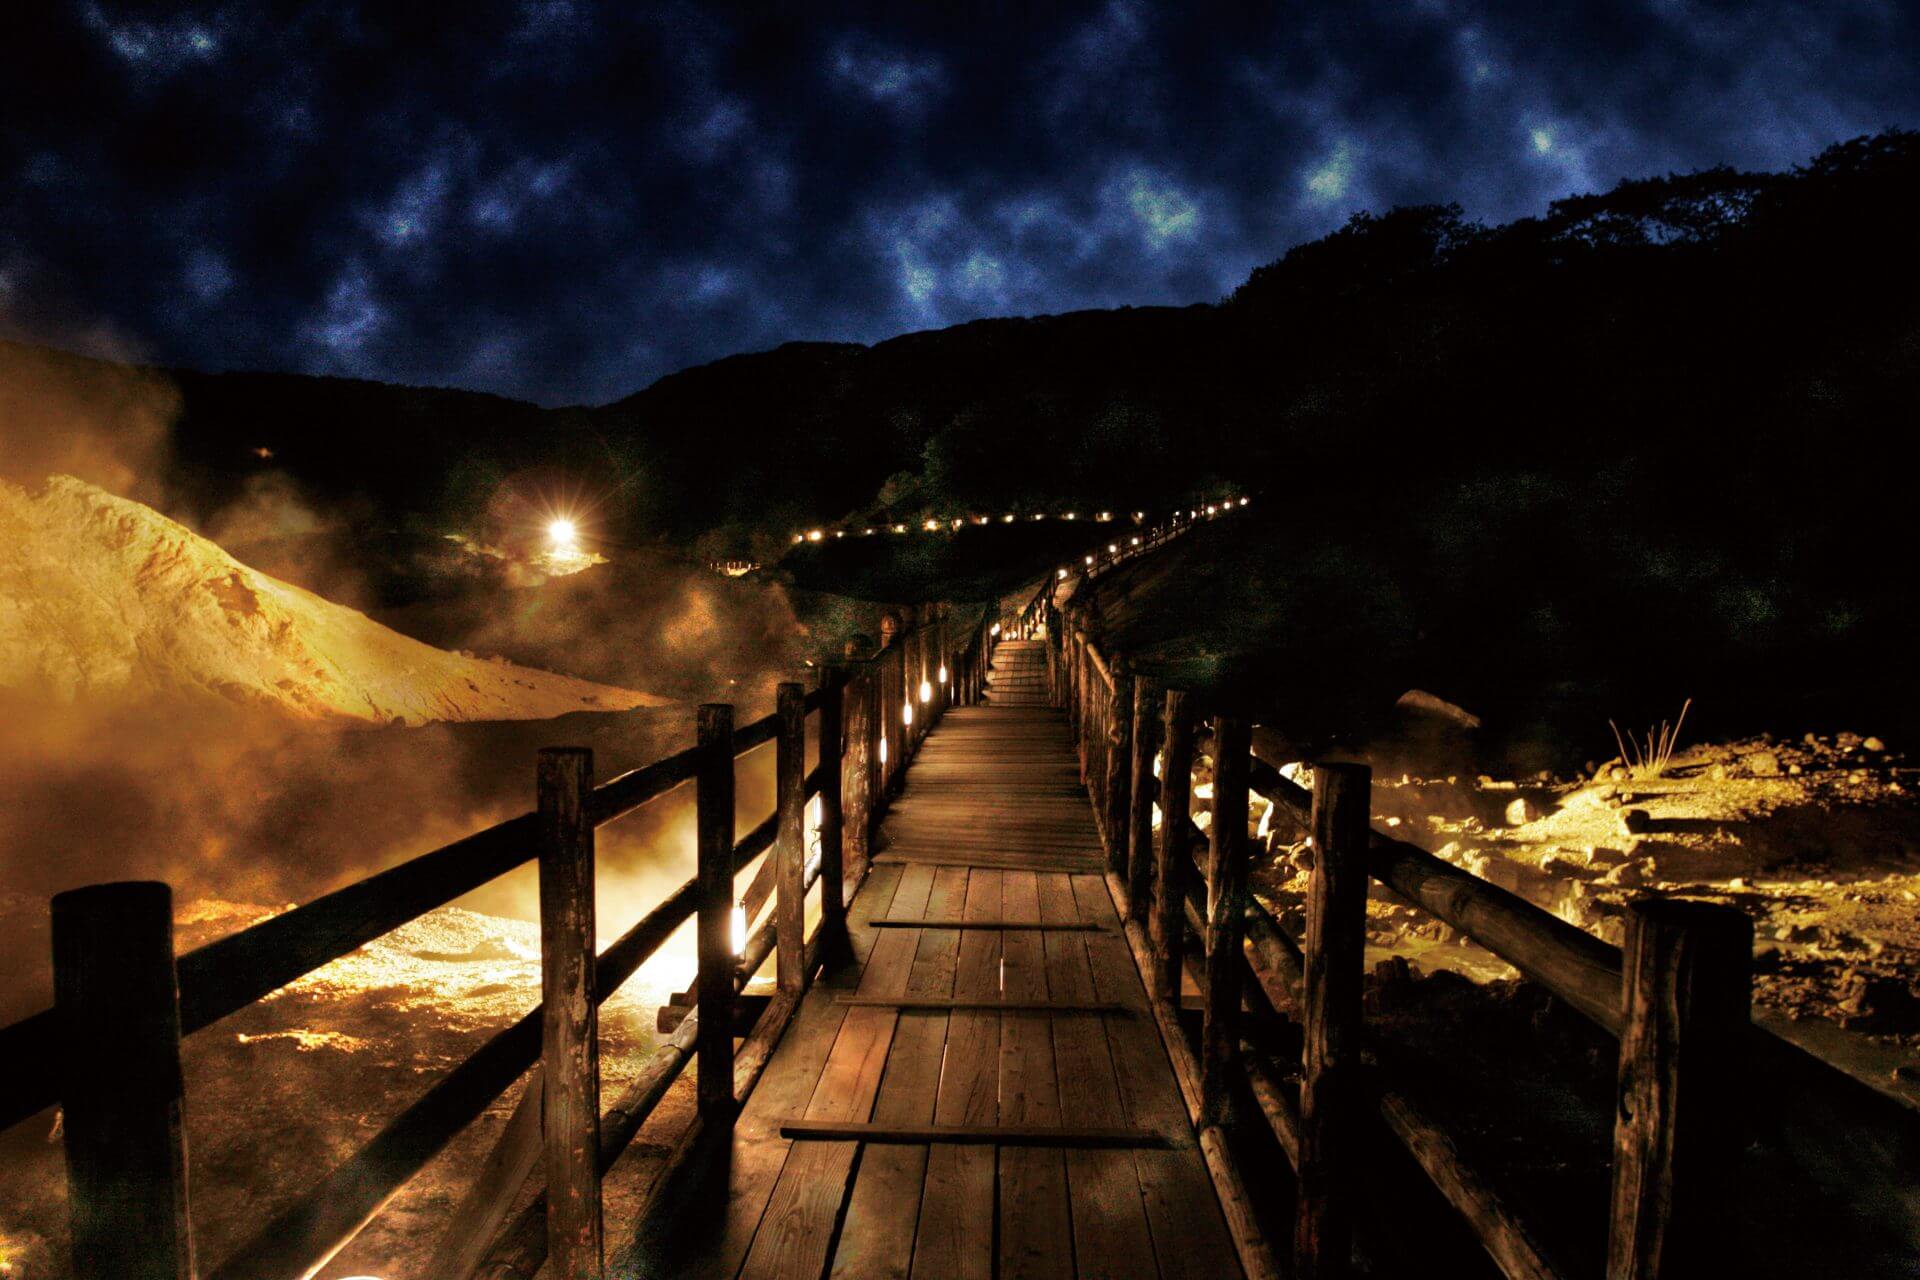 Take a Nighttime Stroll Along the “Demon Fire” Paths